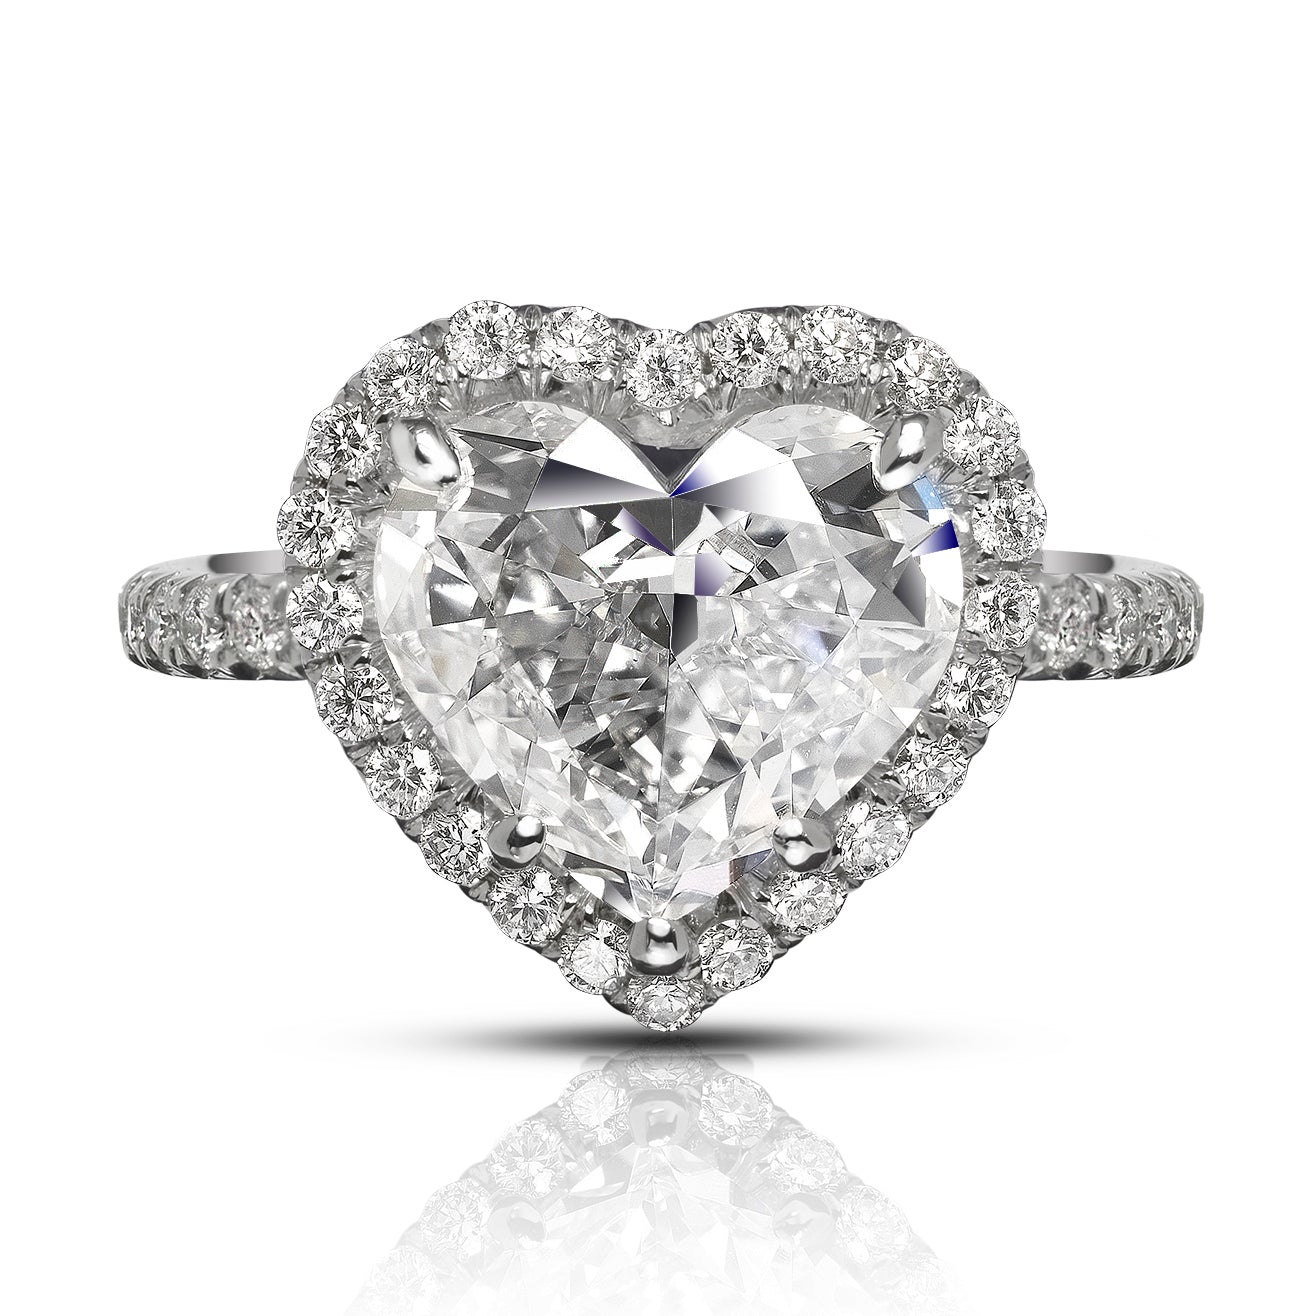 Eco Friendly Diamonds For Engagement Ring at 31000.00 INR in Surat |  Leranath Diamond